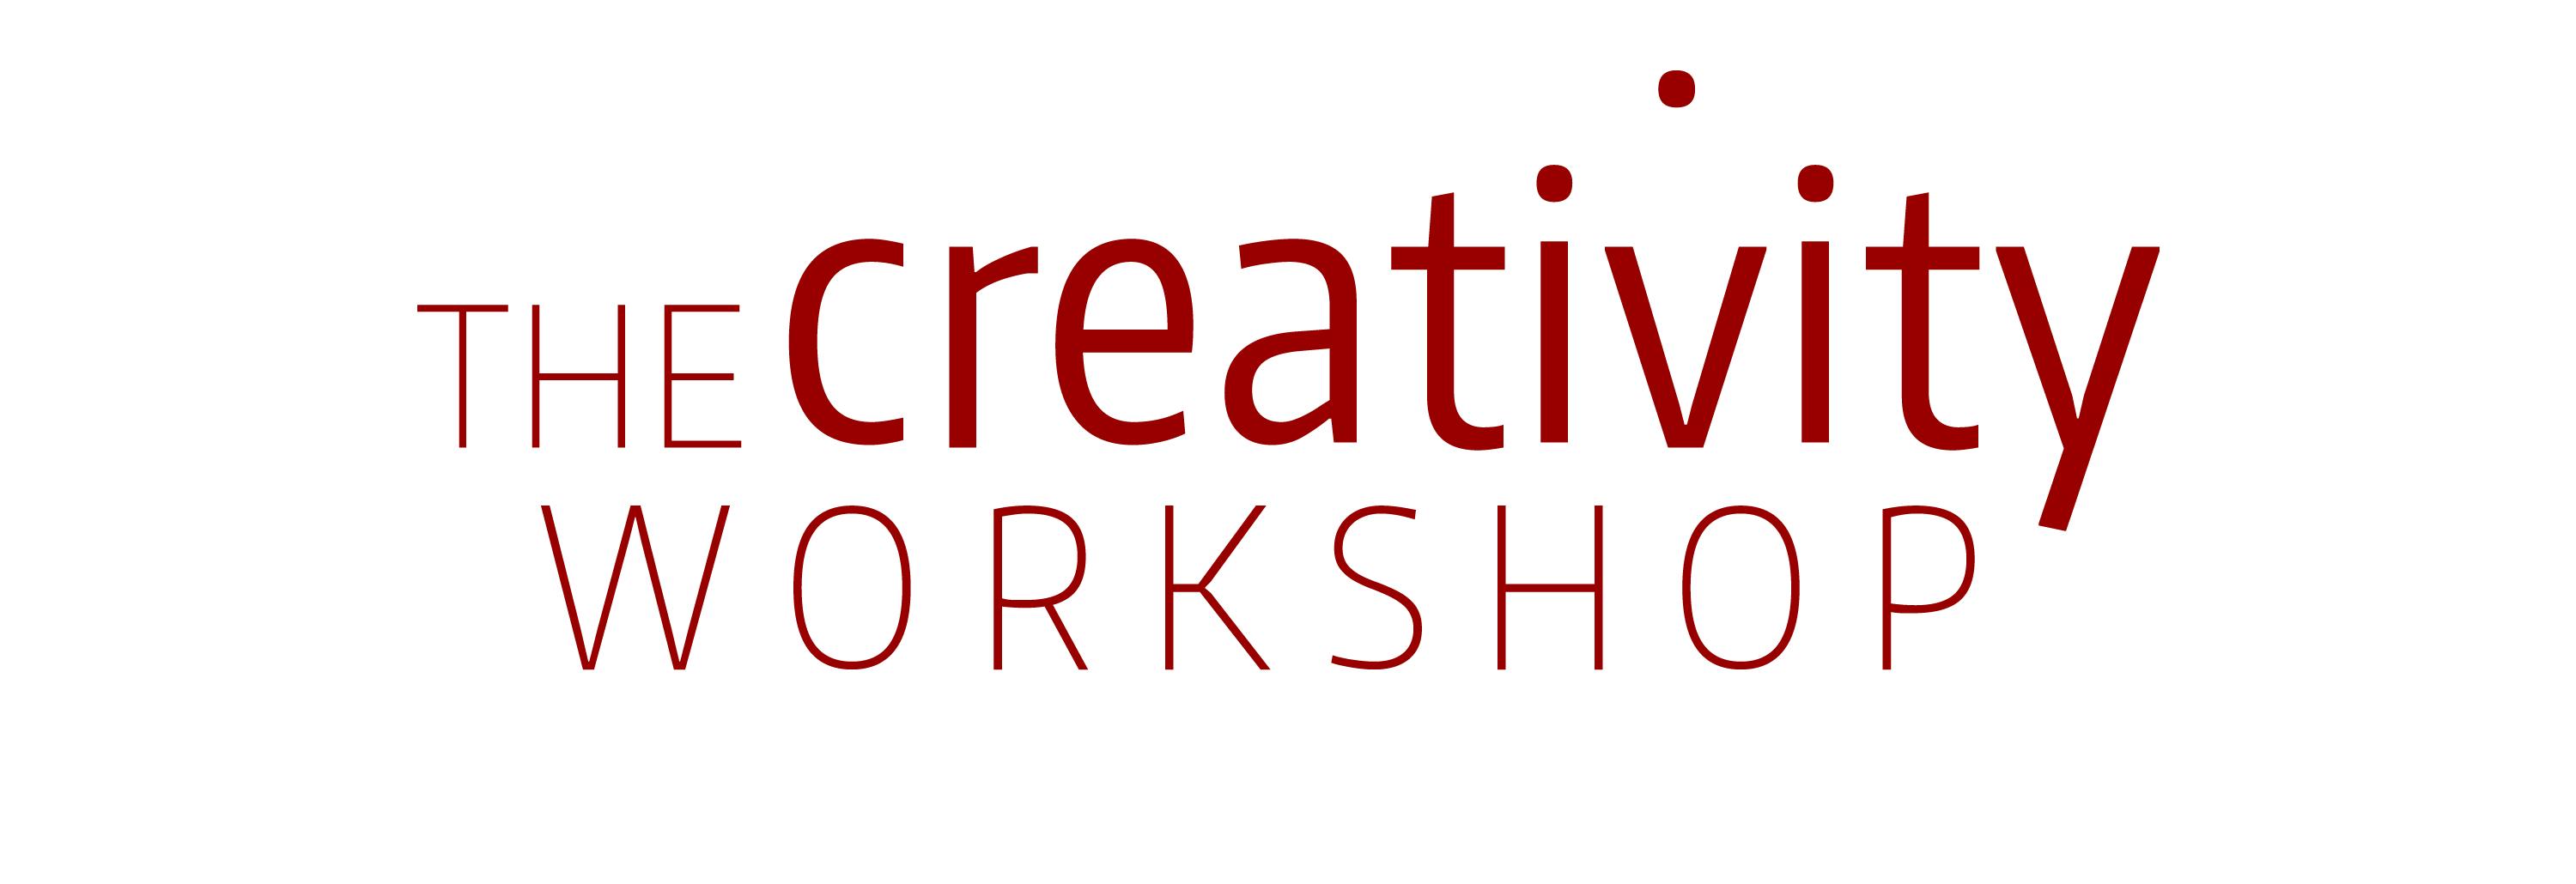 The Creativity Workshop in Barcelona